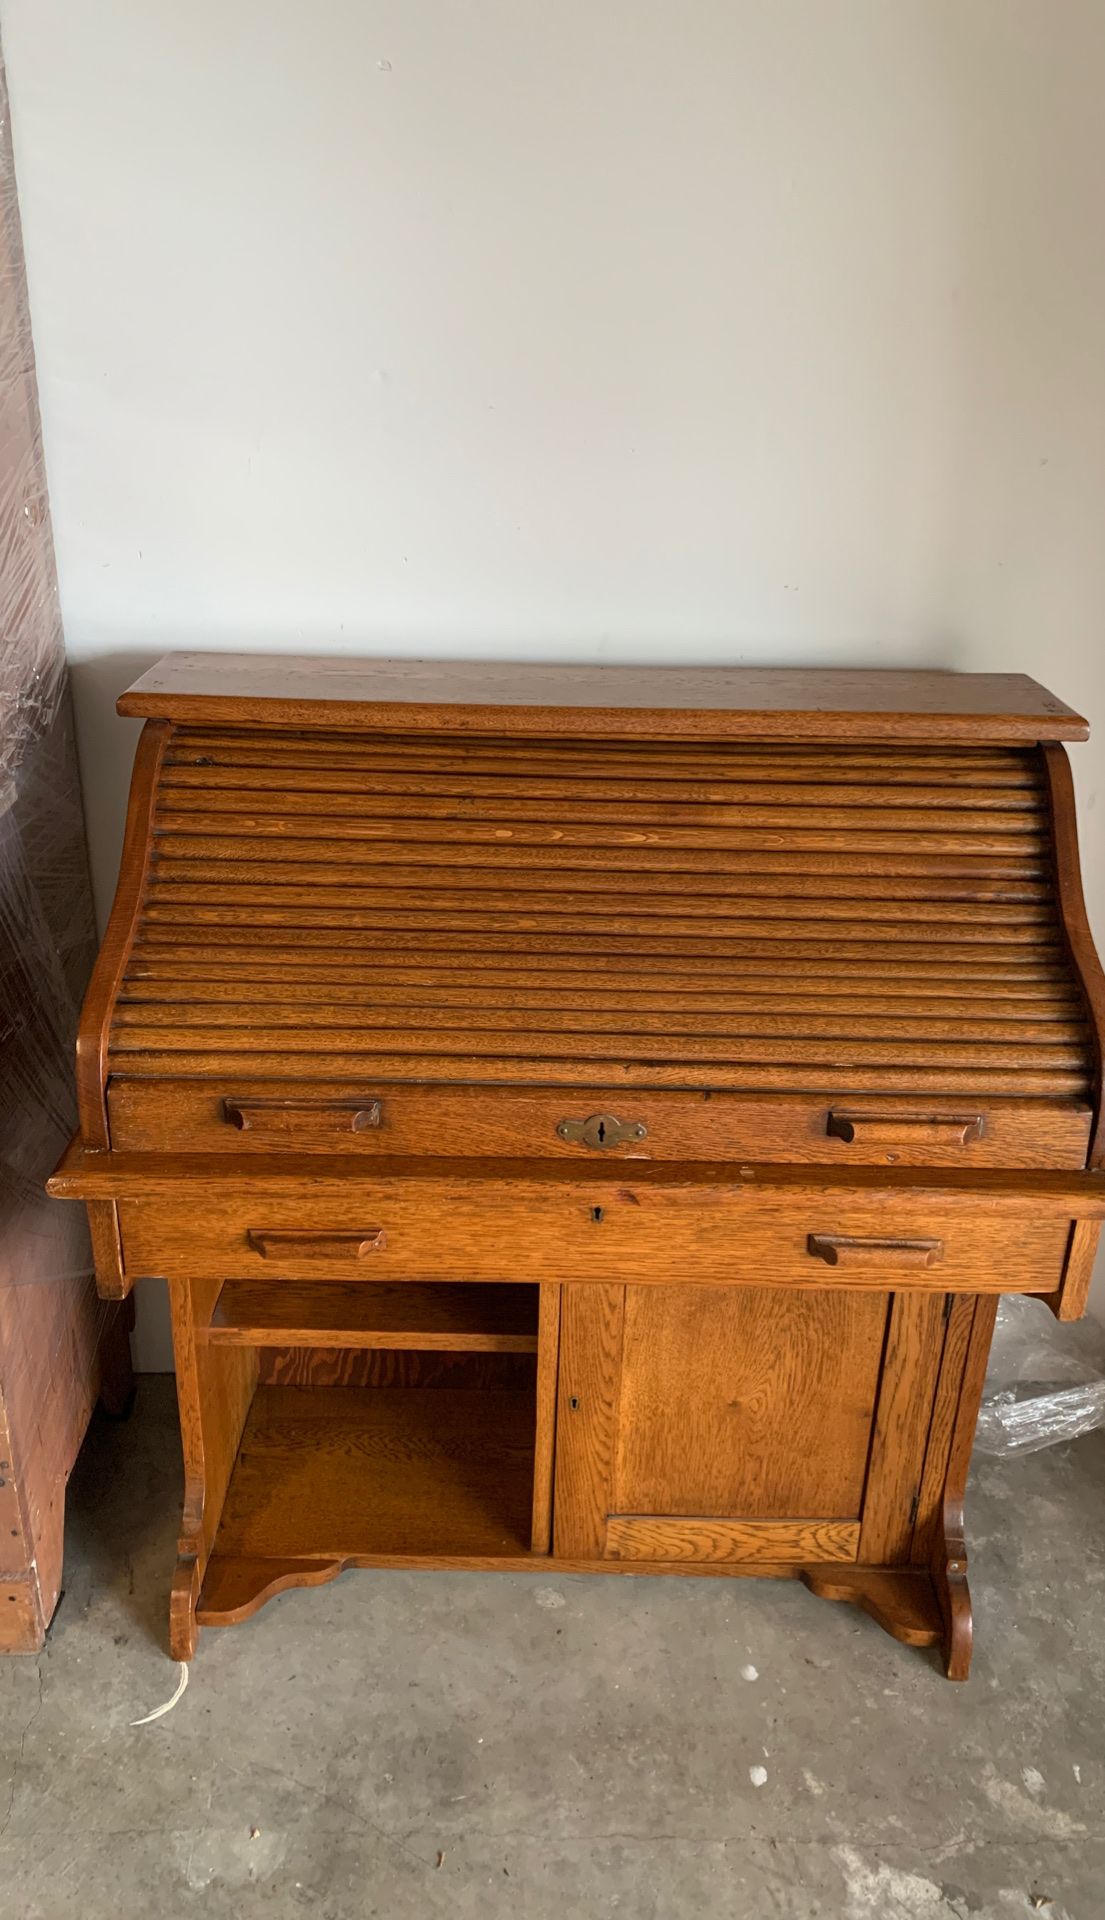 Antique small roll top desk